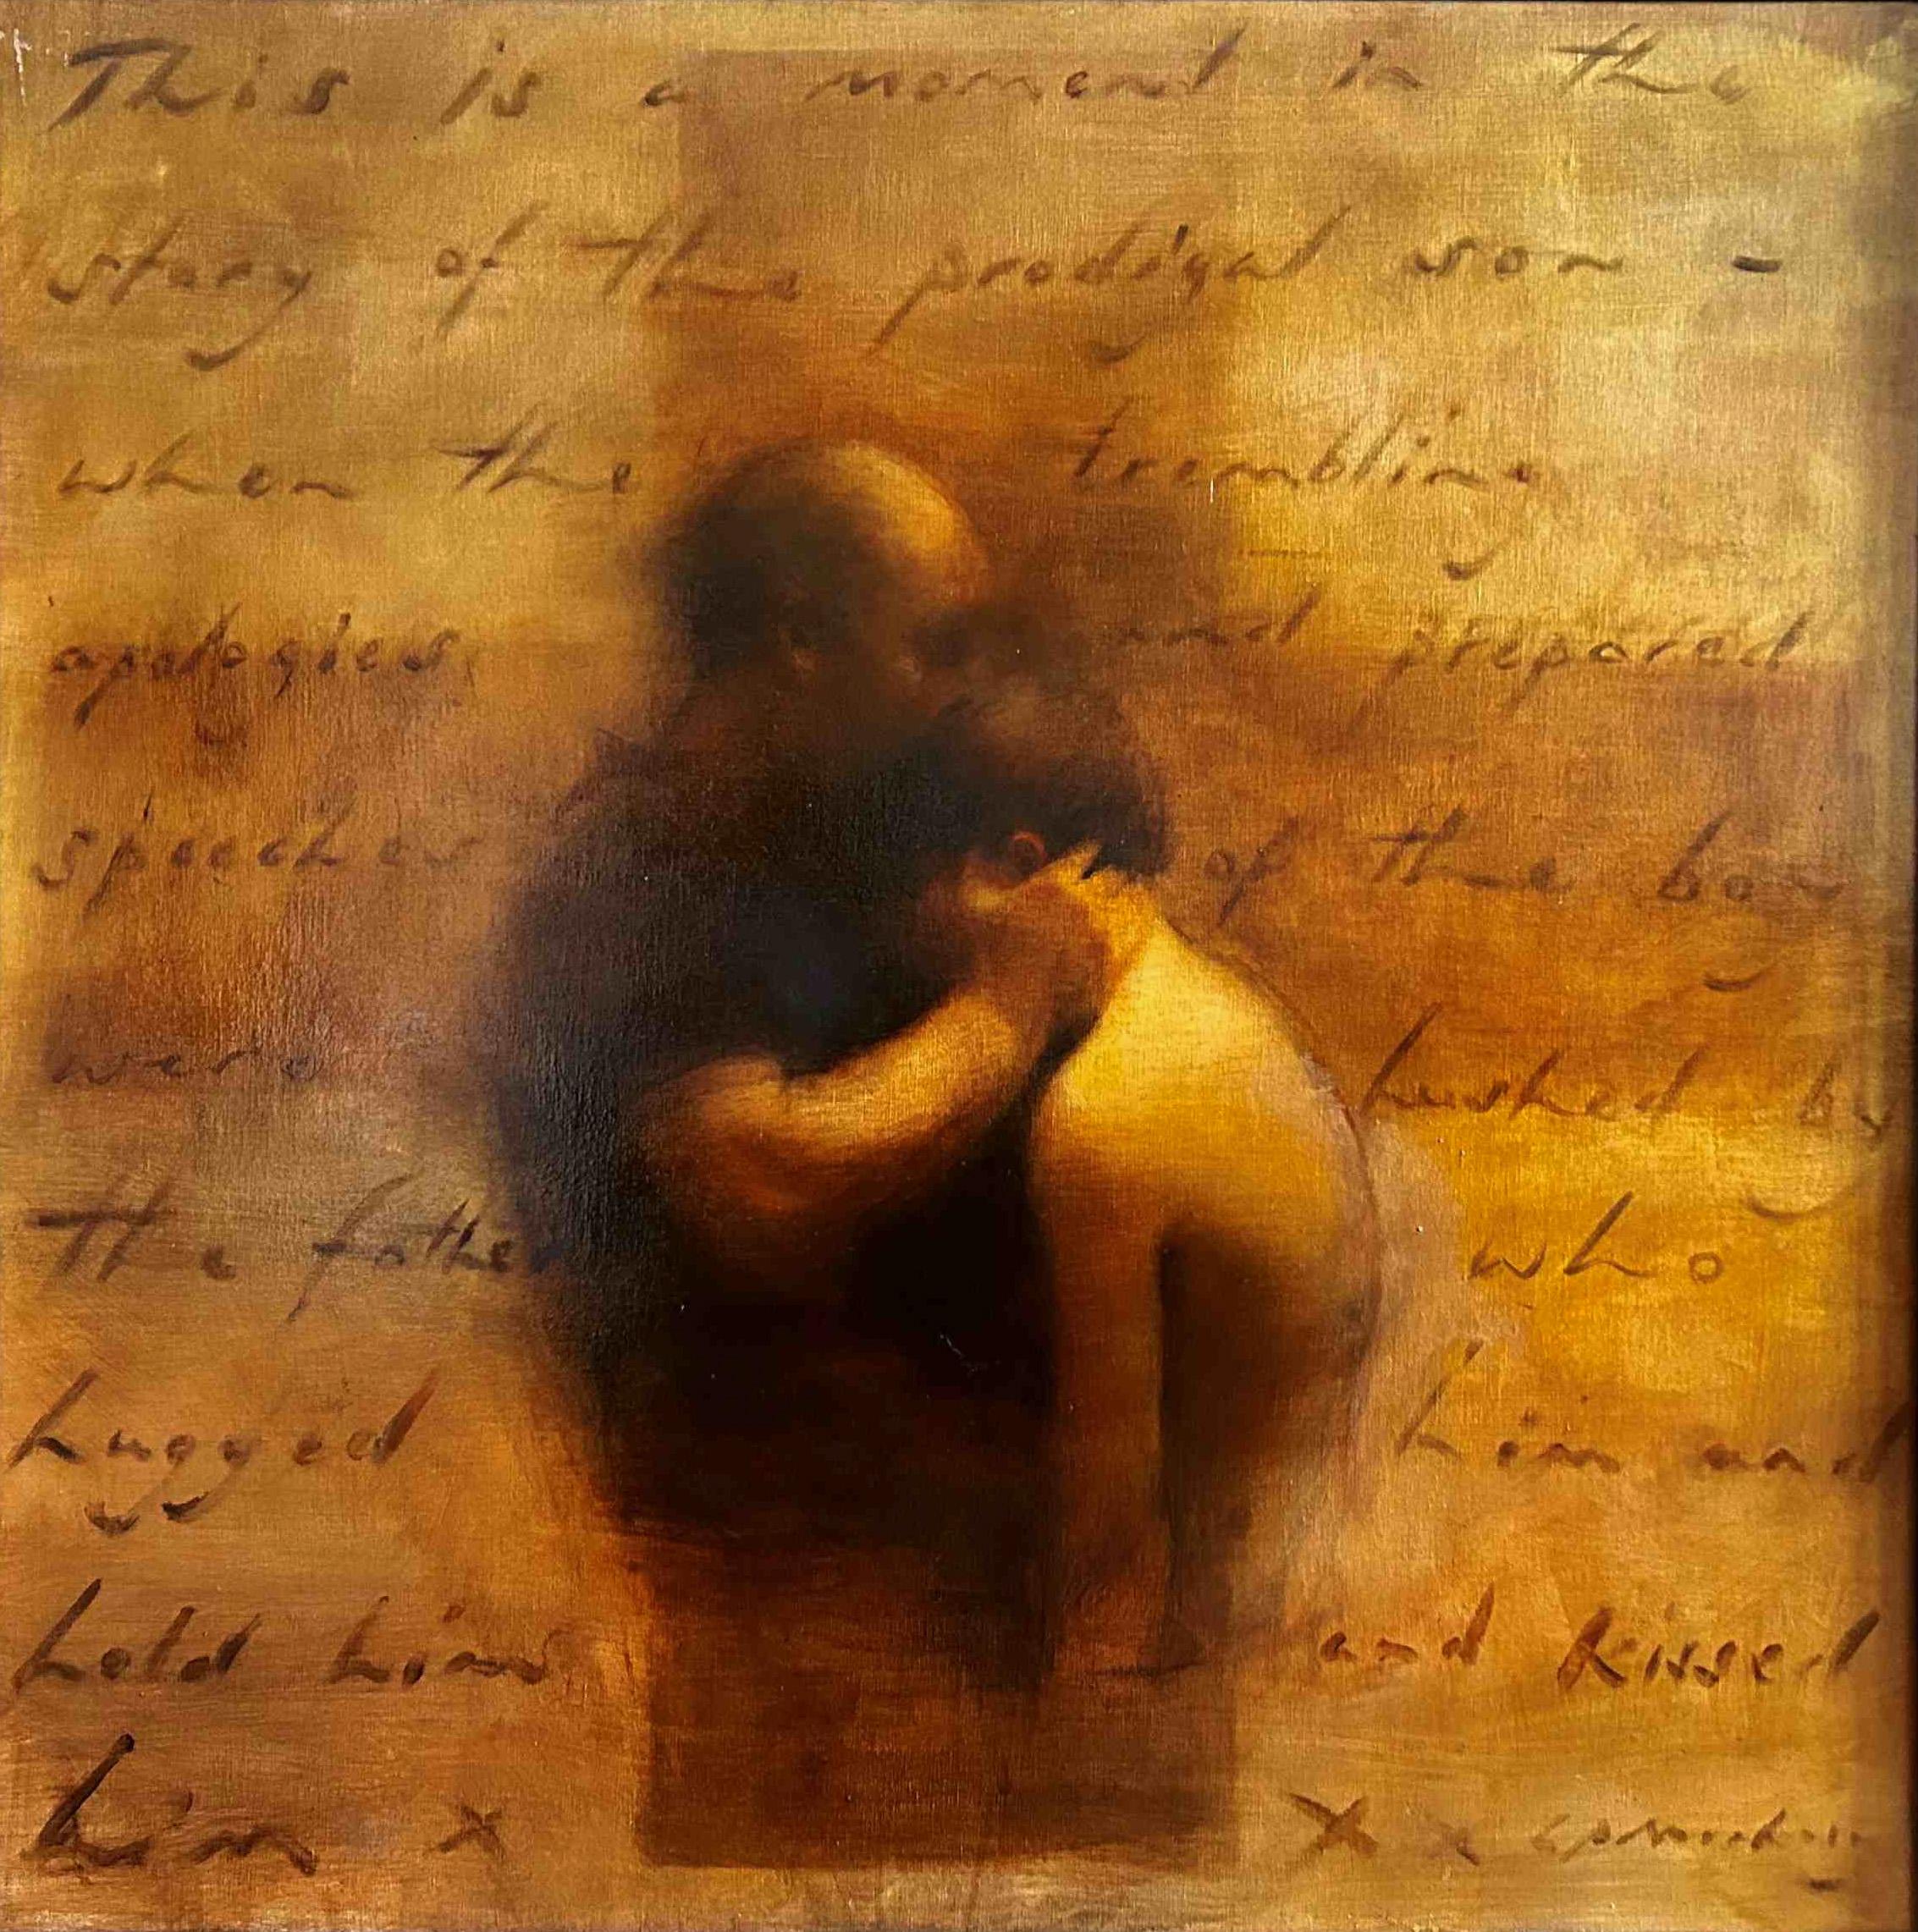 The Prodigal Son II - Oil, Parable, Father, Son, hug, embrace, forgiveness, love - Art by Charlie Mackesy